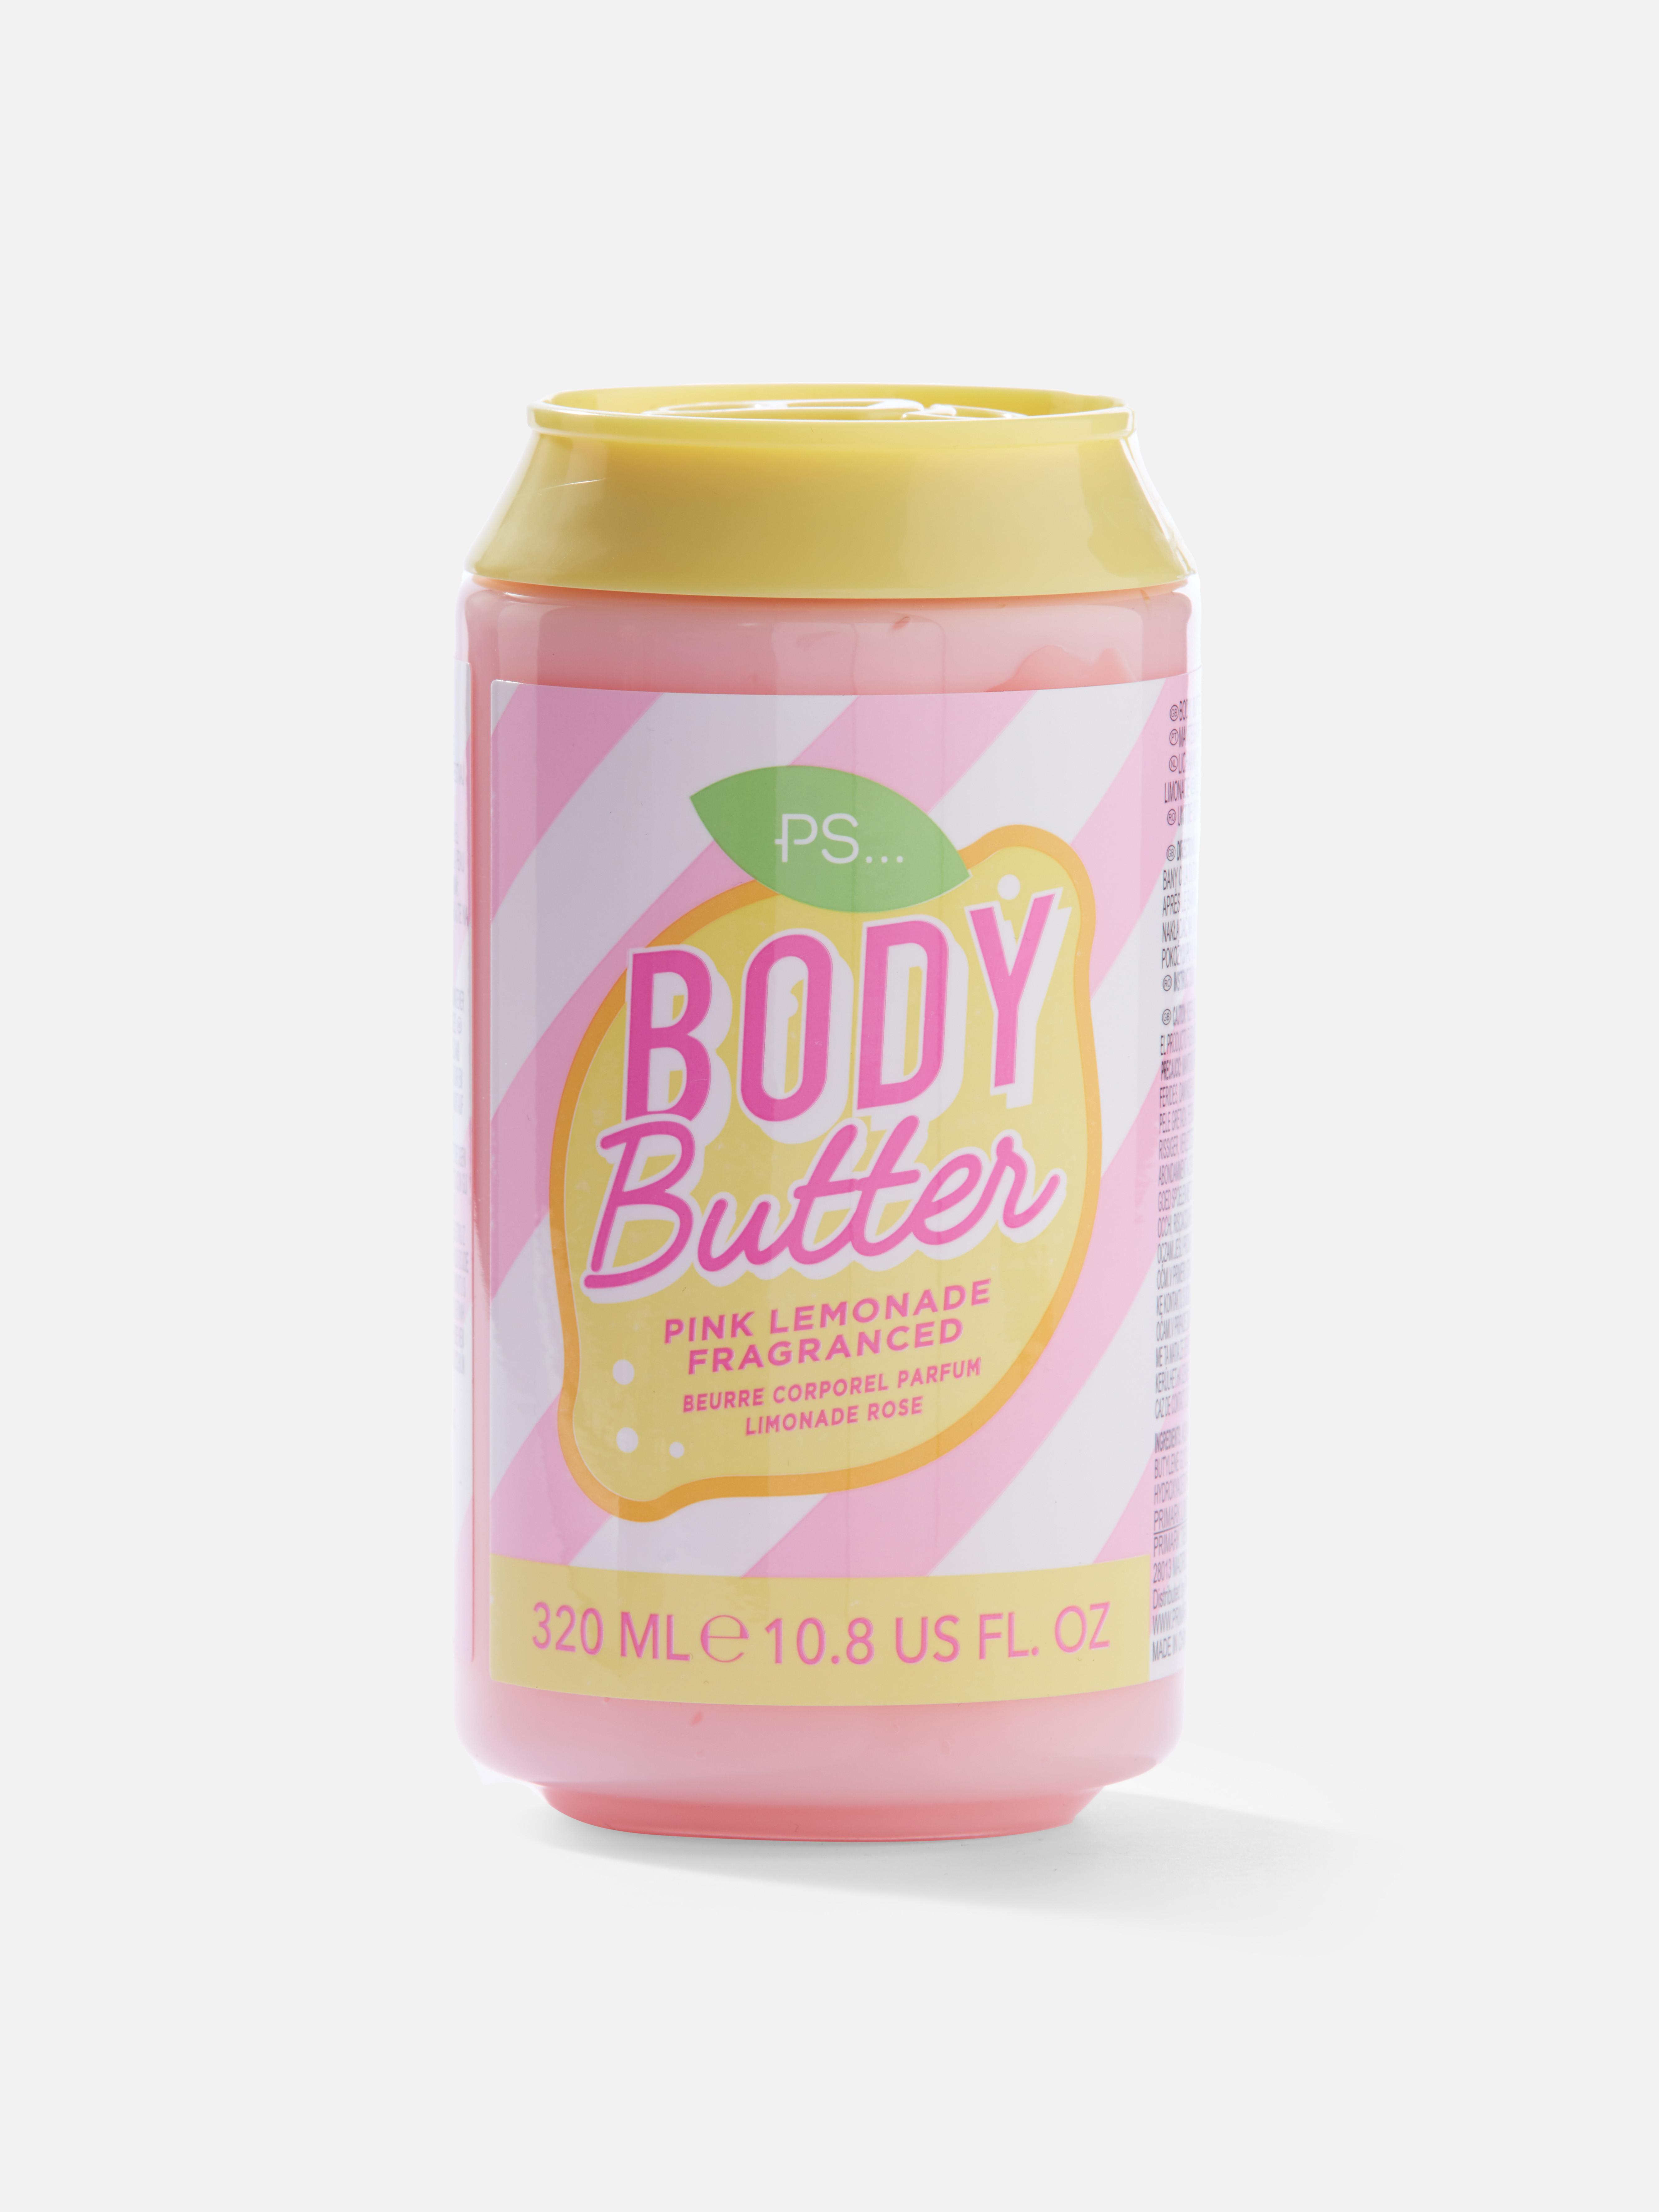 PS... Pink Lemonade Body Butter